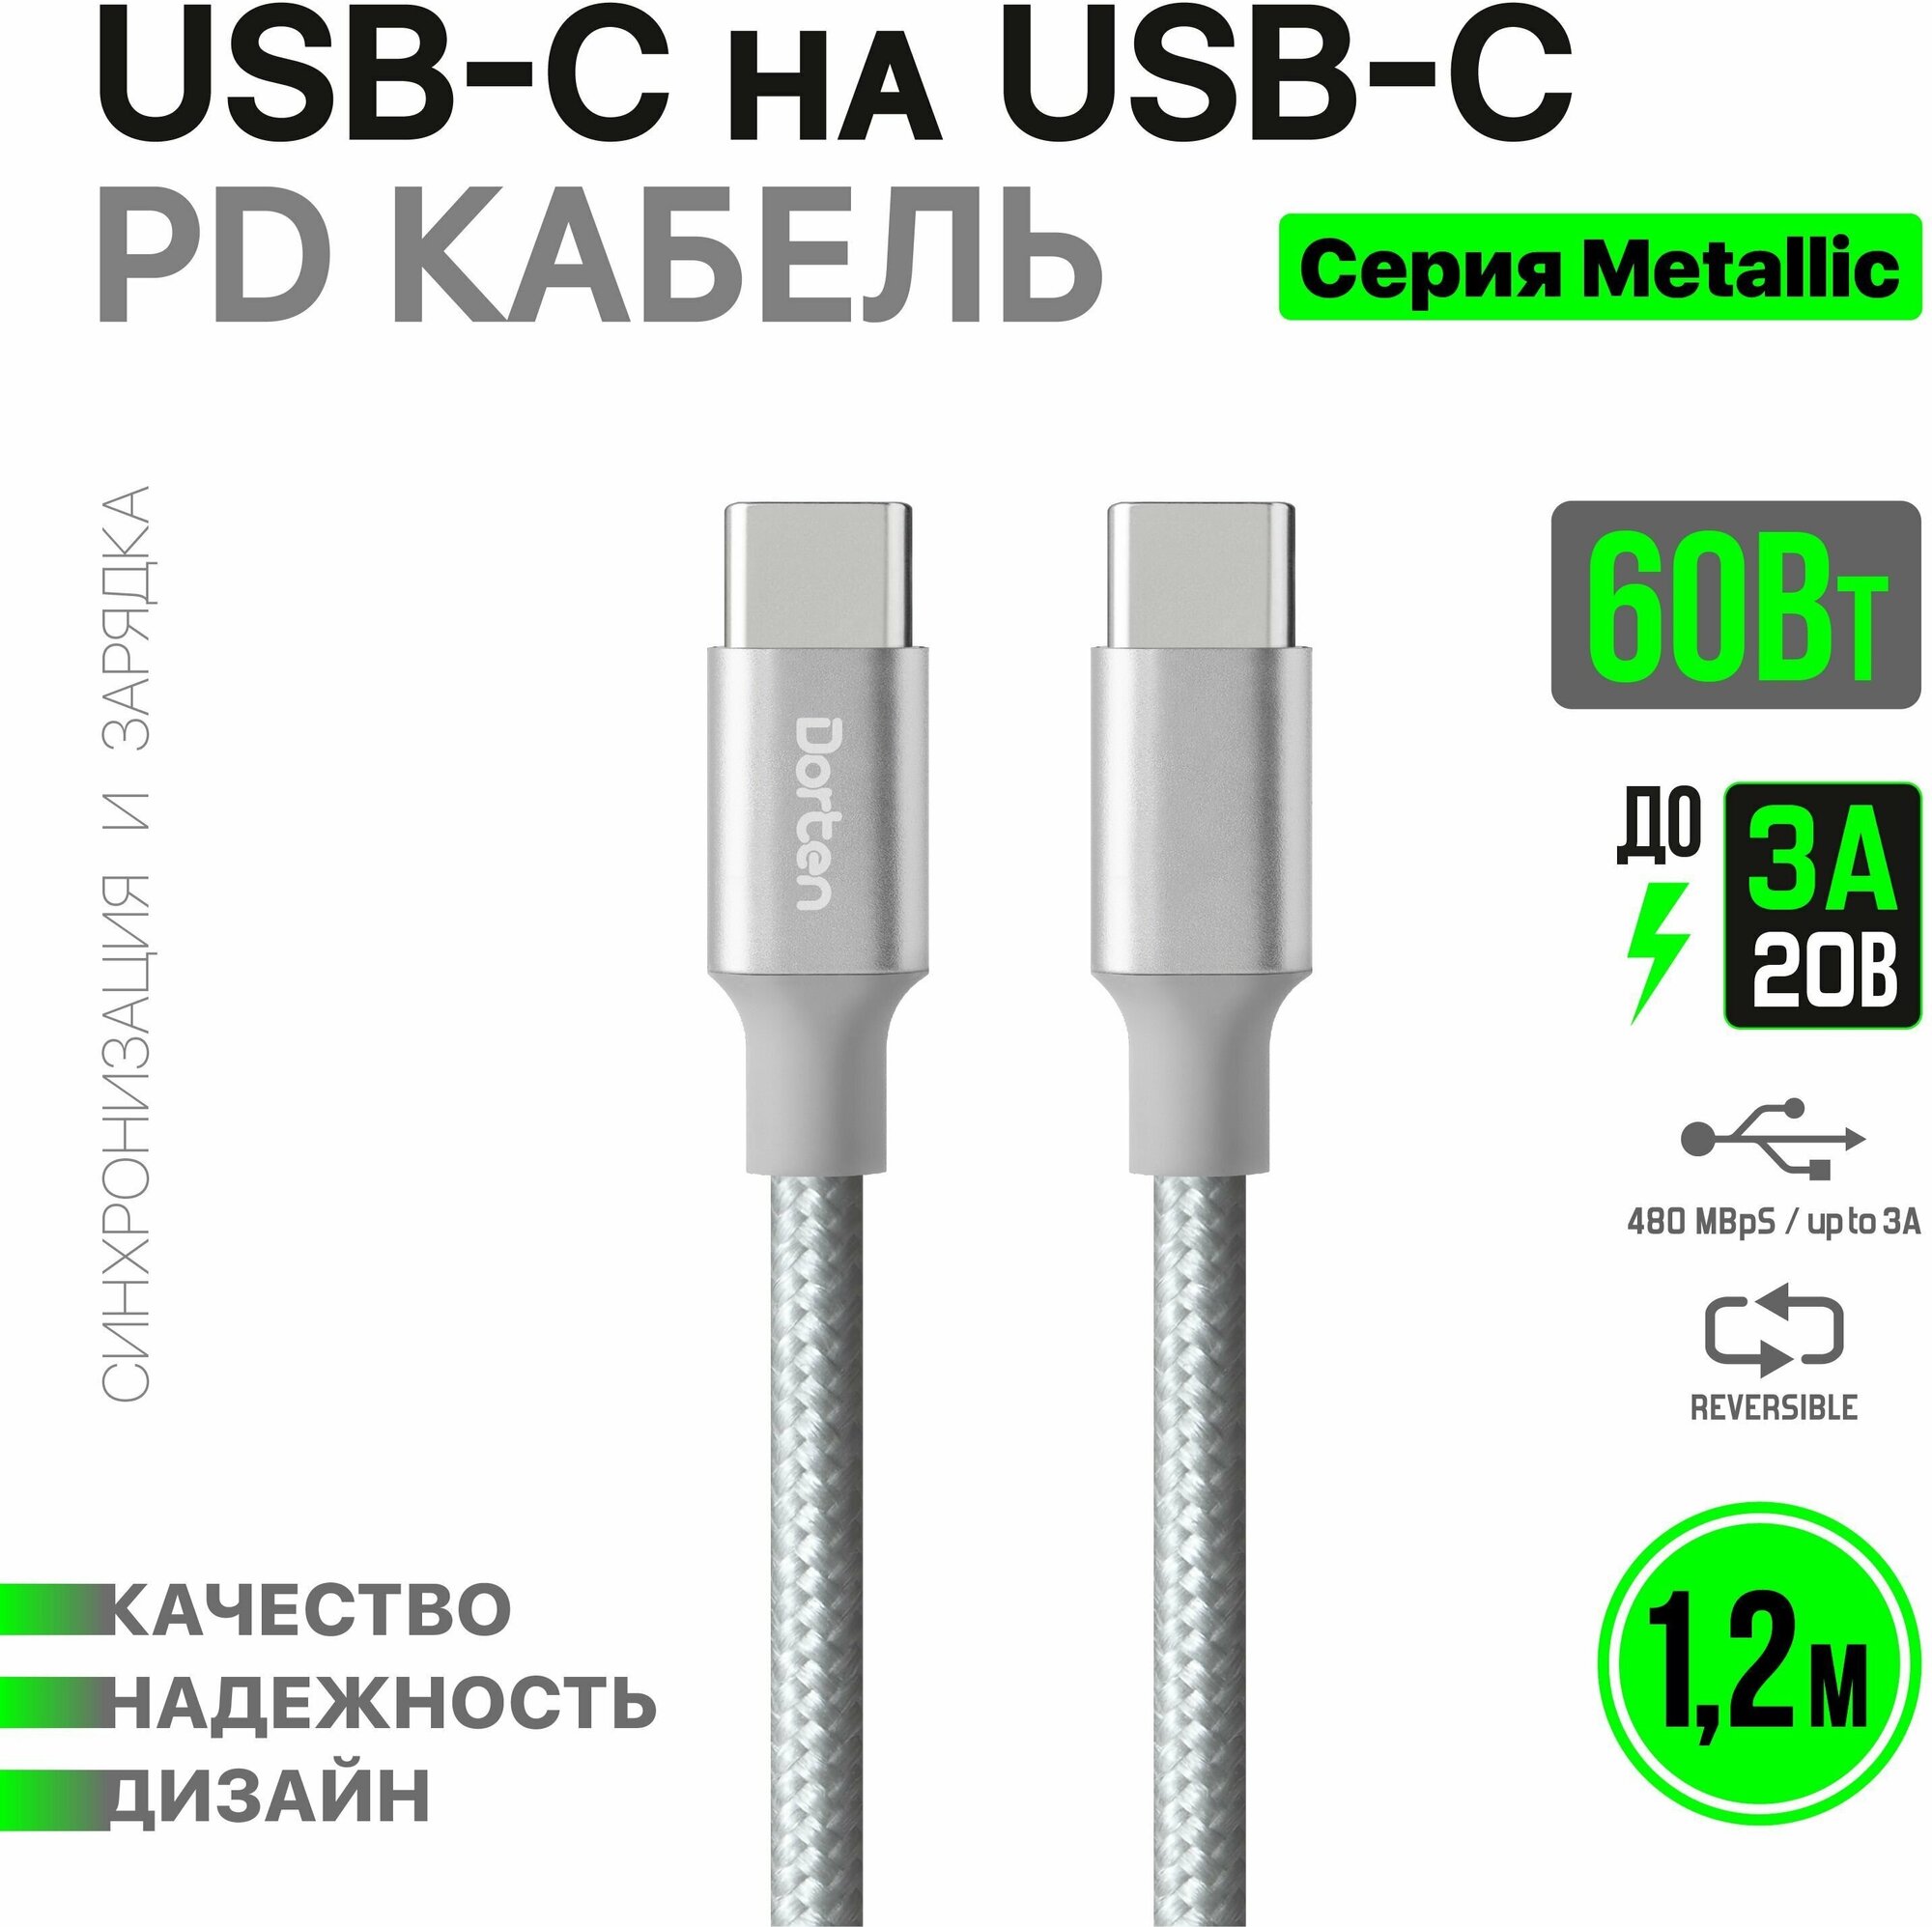 Кабель USB-C для зарядки телефона 60 Вт 1,2 метра: Metallic series провод юсб 1,2м - Серебристый